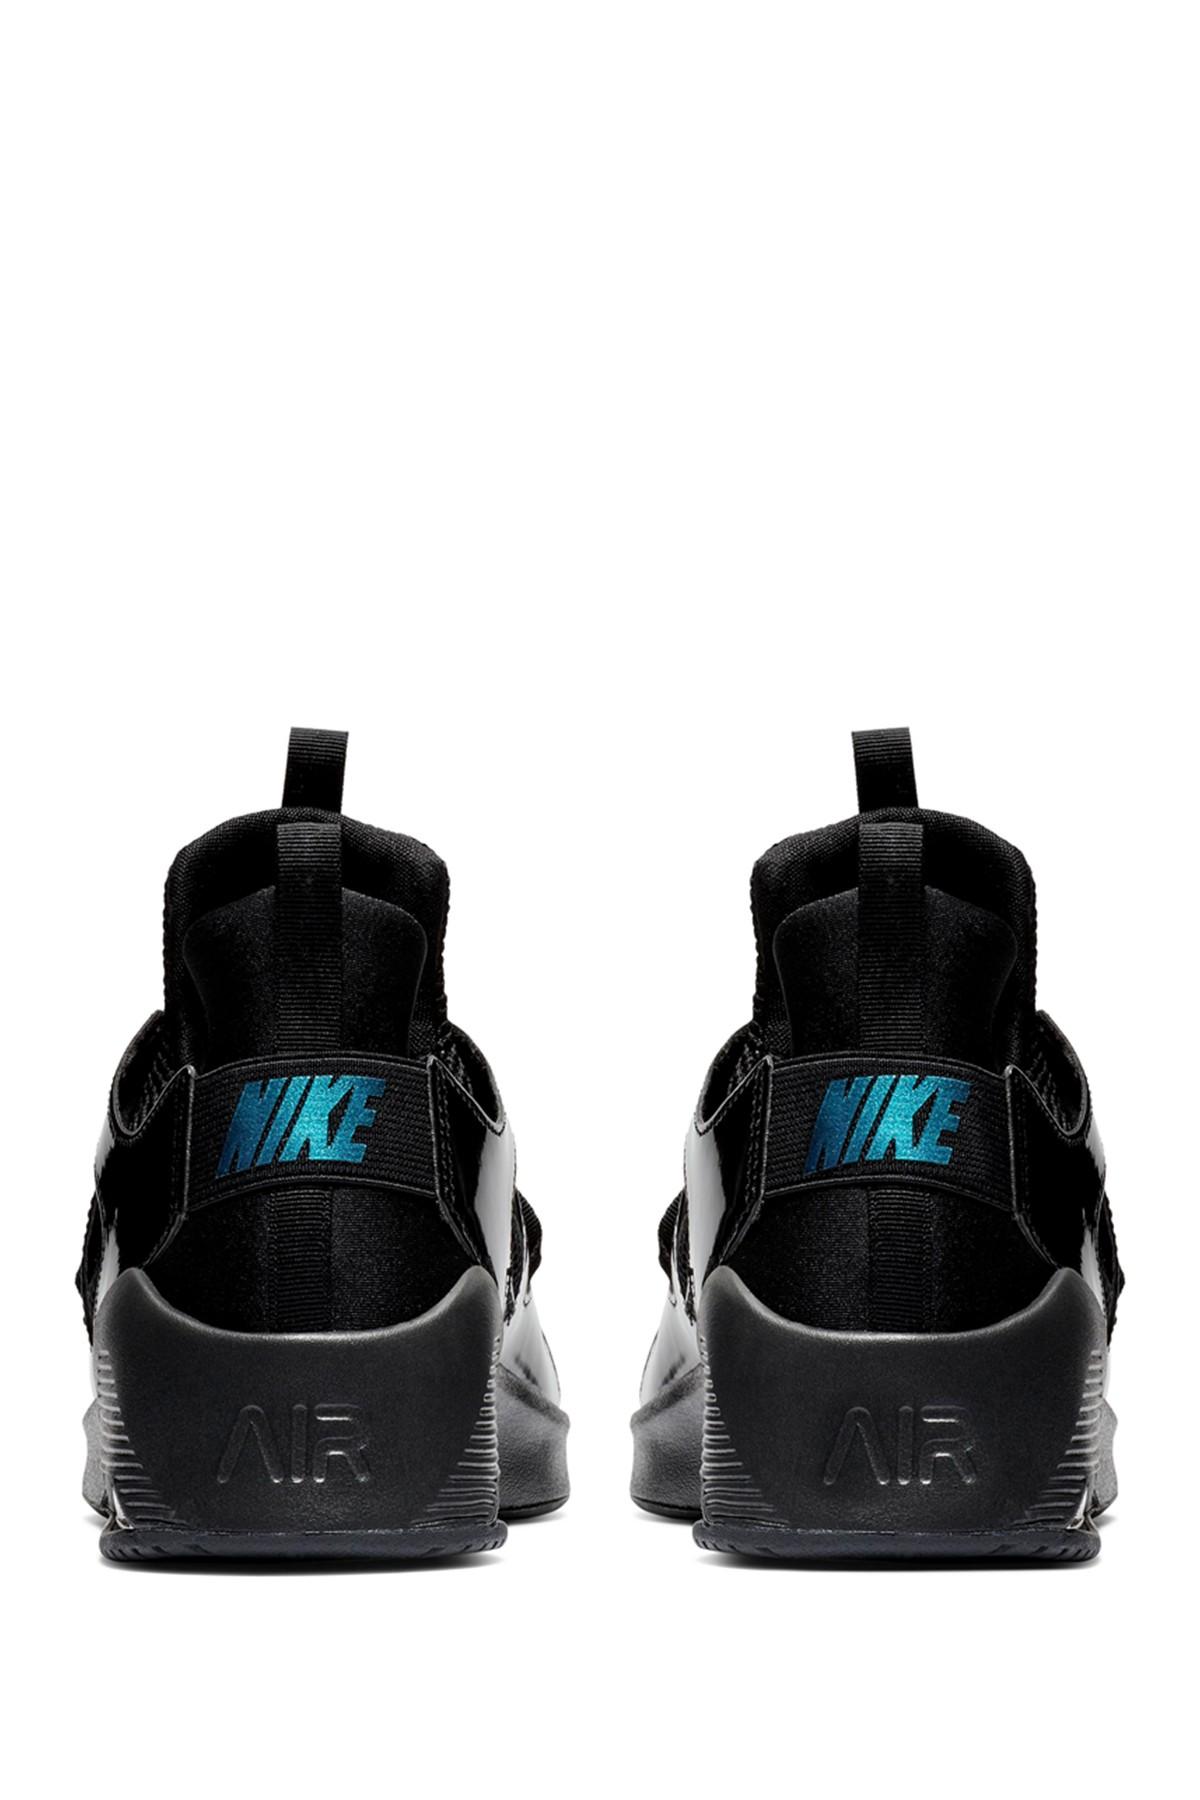 Nike Synthetic Air Alluxe Amd Sneaker in Black - Lyst